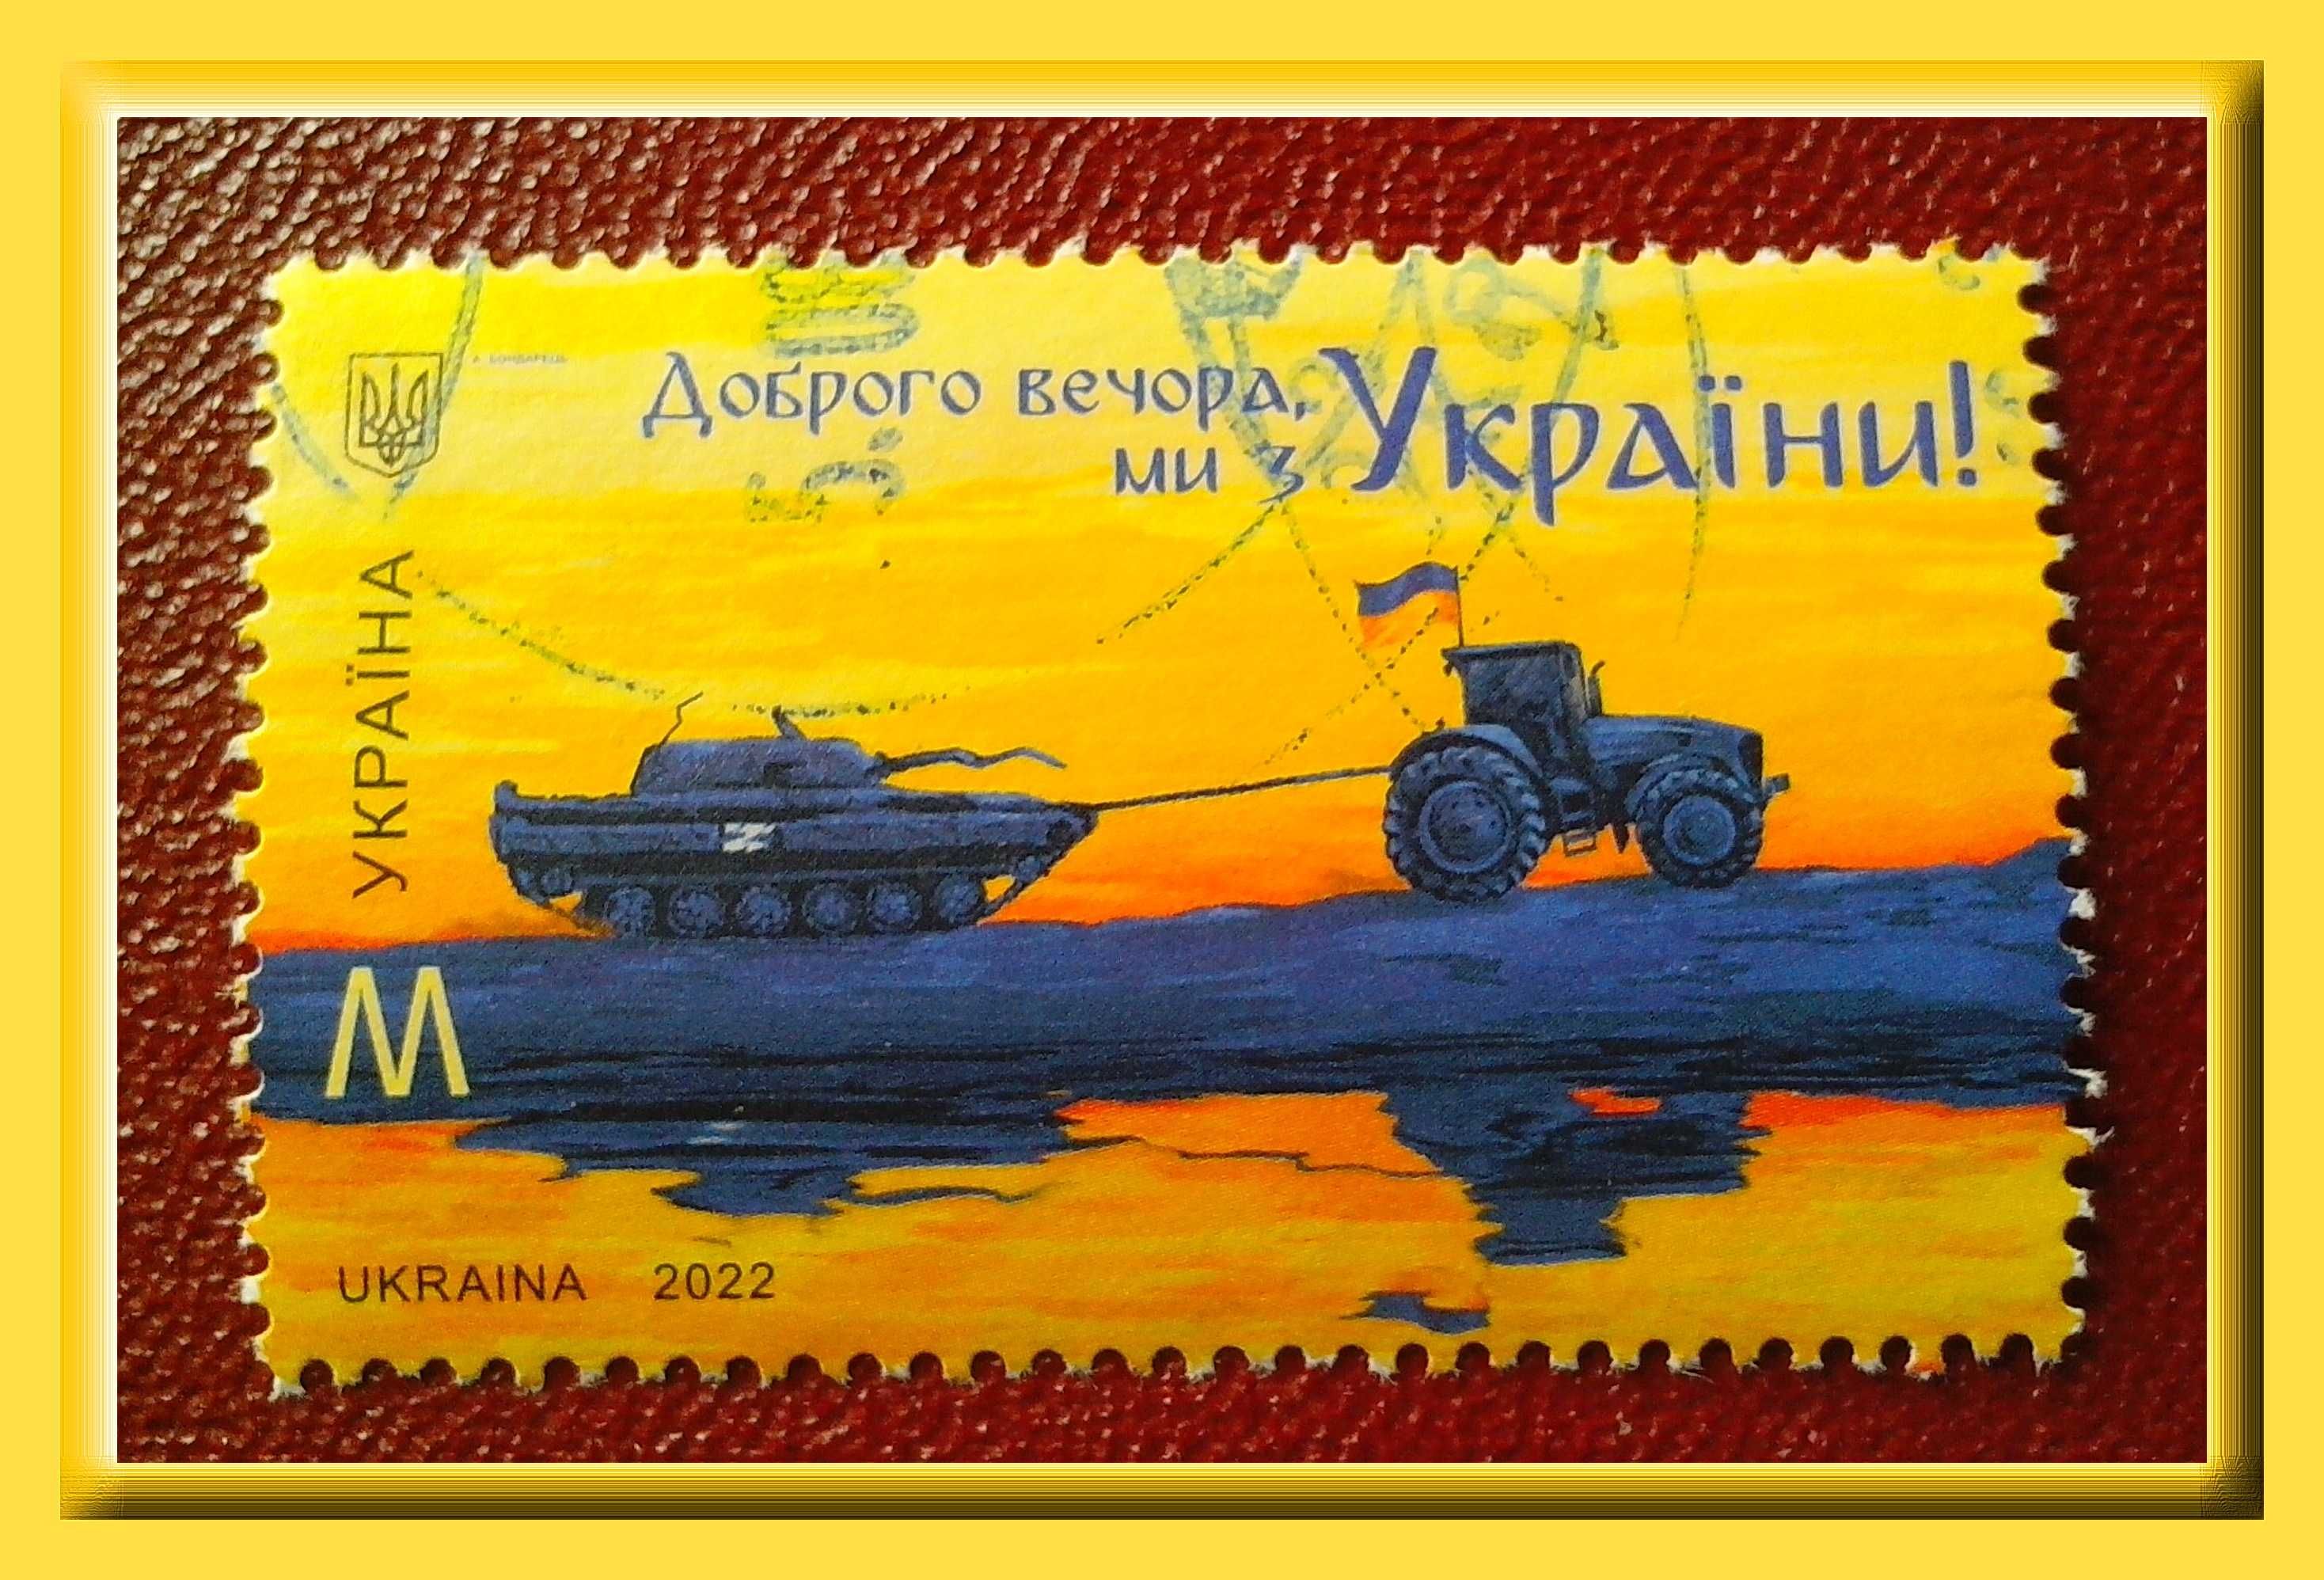 Почтовая марка Украины 2022 г.  «Добрый вечер, мы с Украины».